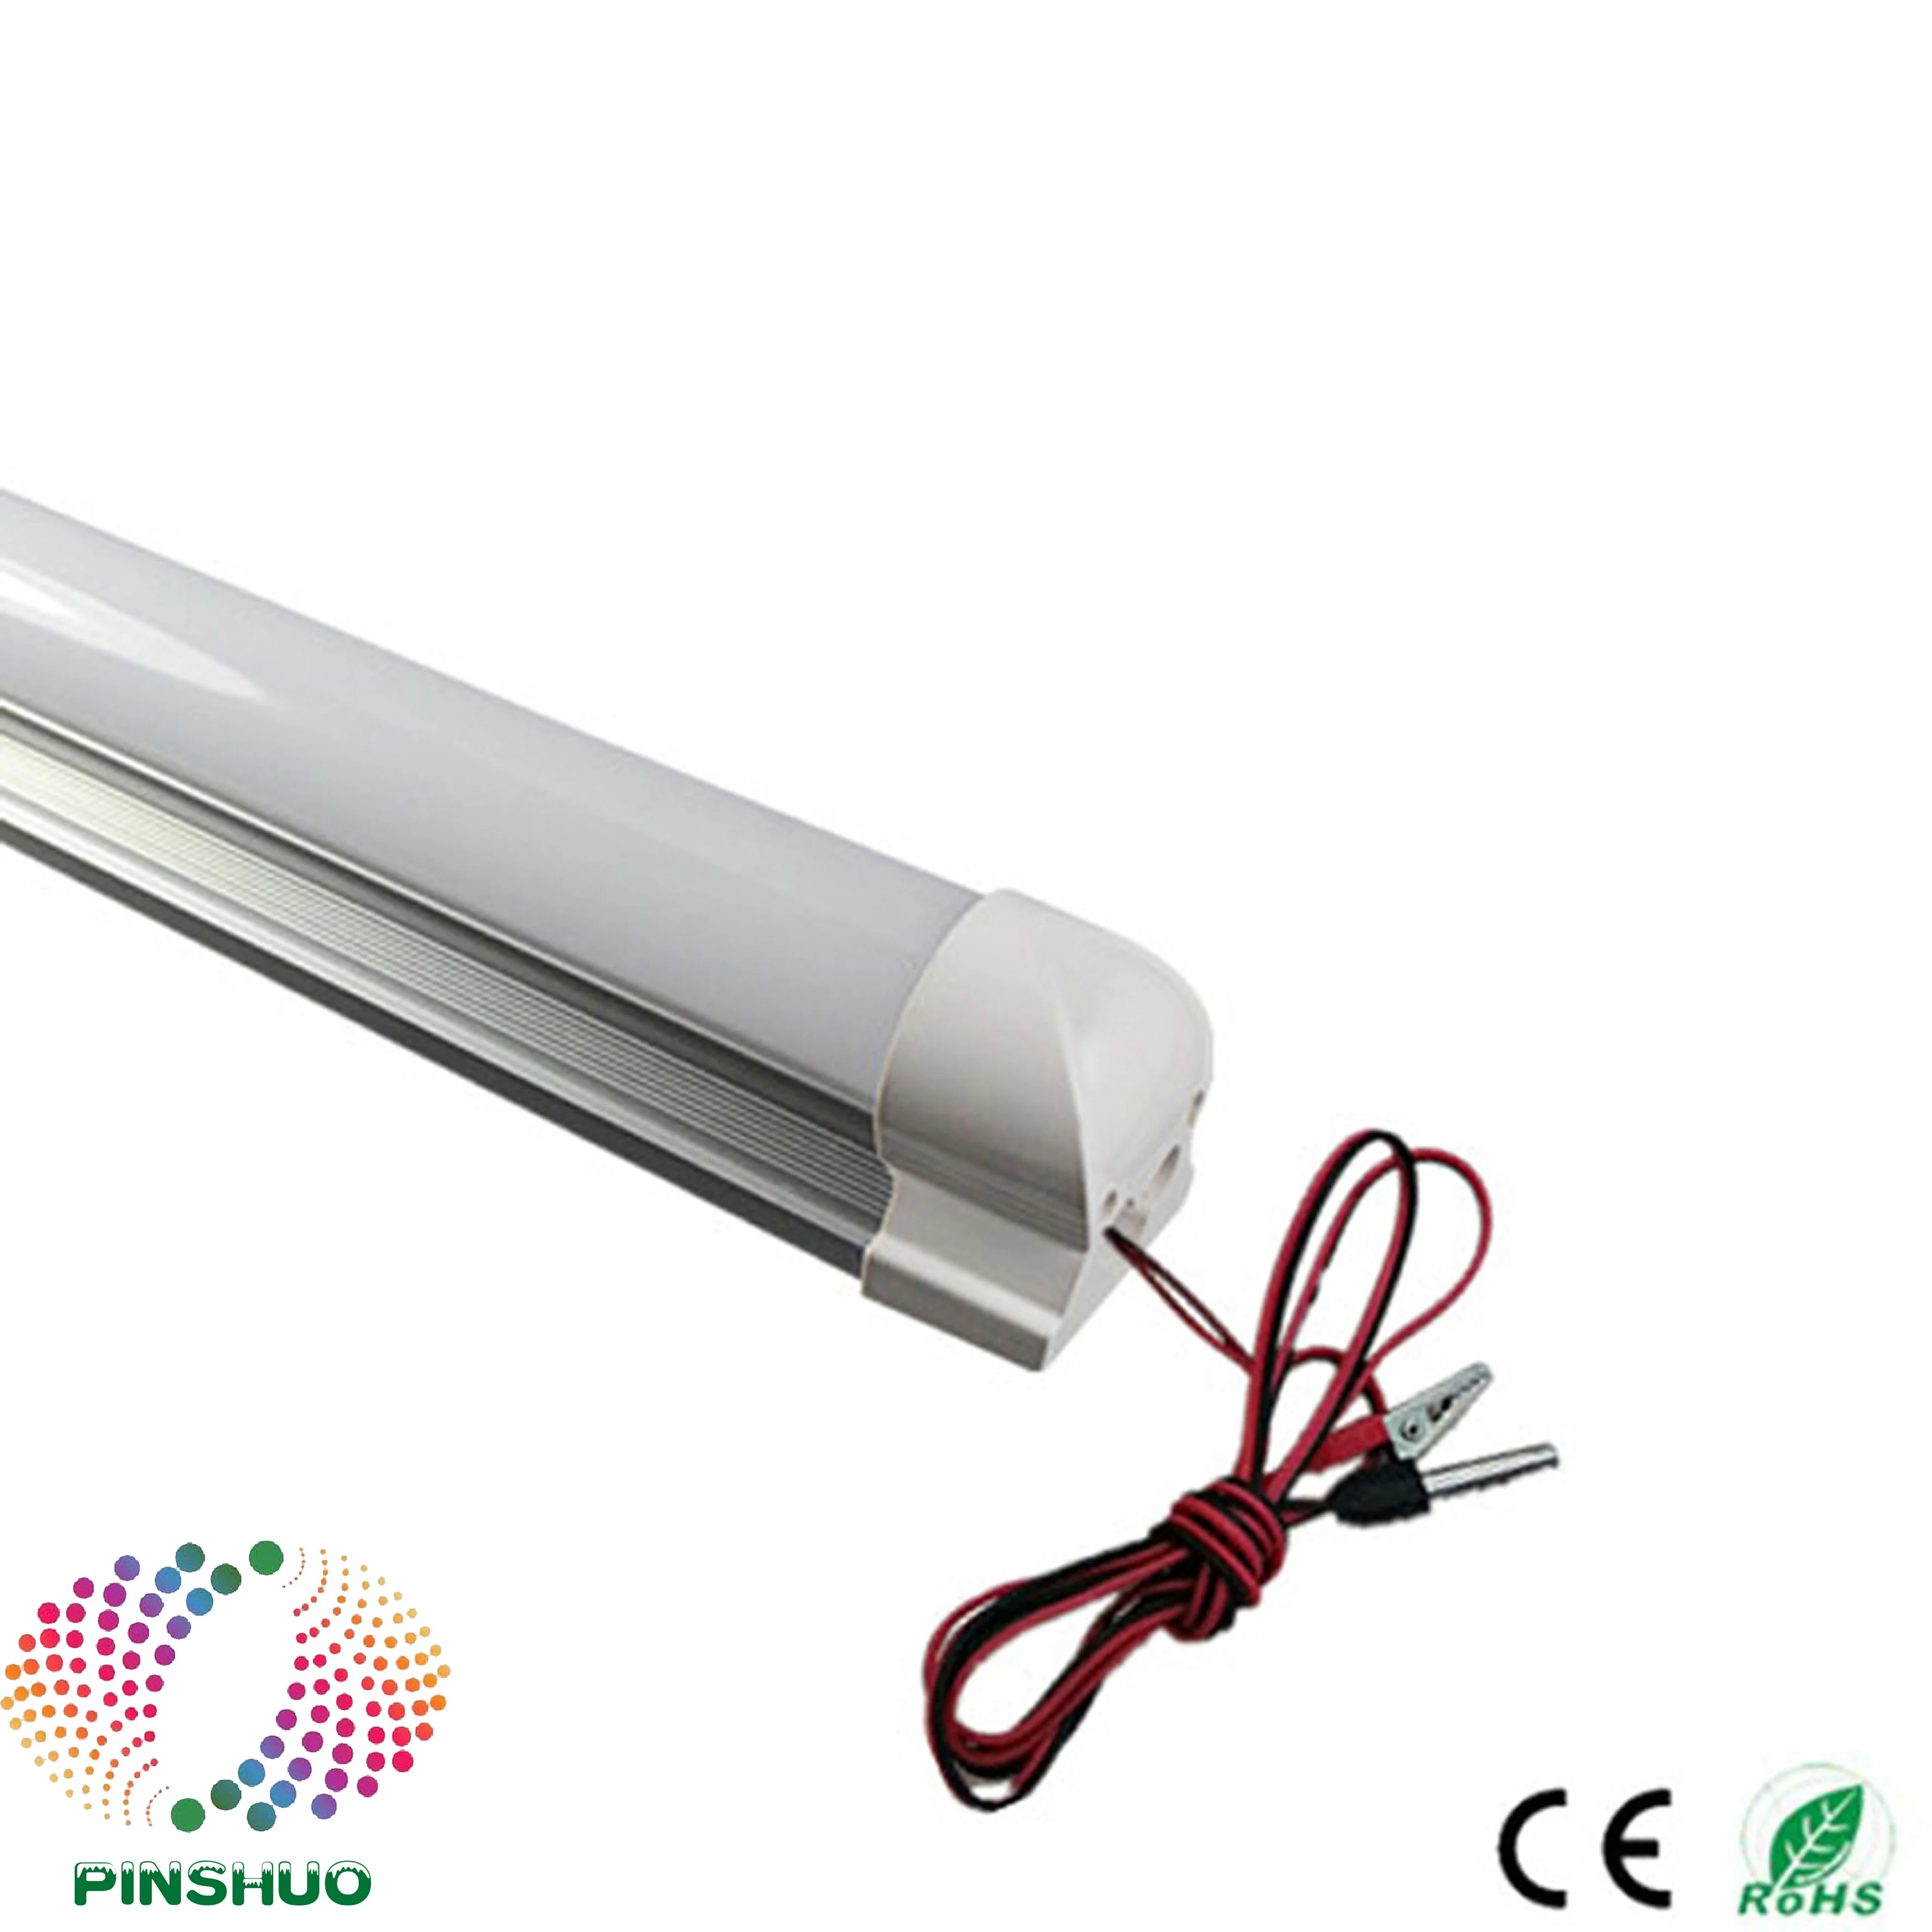 

10PCS DC12V LED Tube T8 12V Integrated Fluorescent Light 4ft 1200mm 1.2m Epistar Chip 3 Years Warranty Lamp Daylight